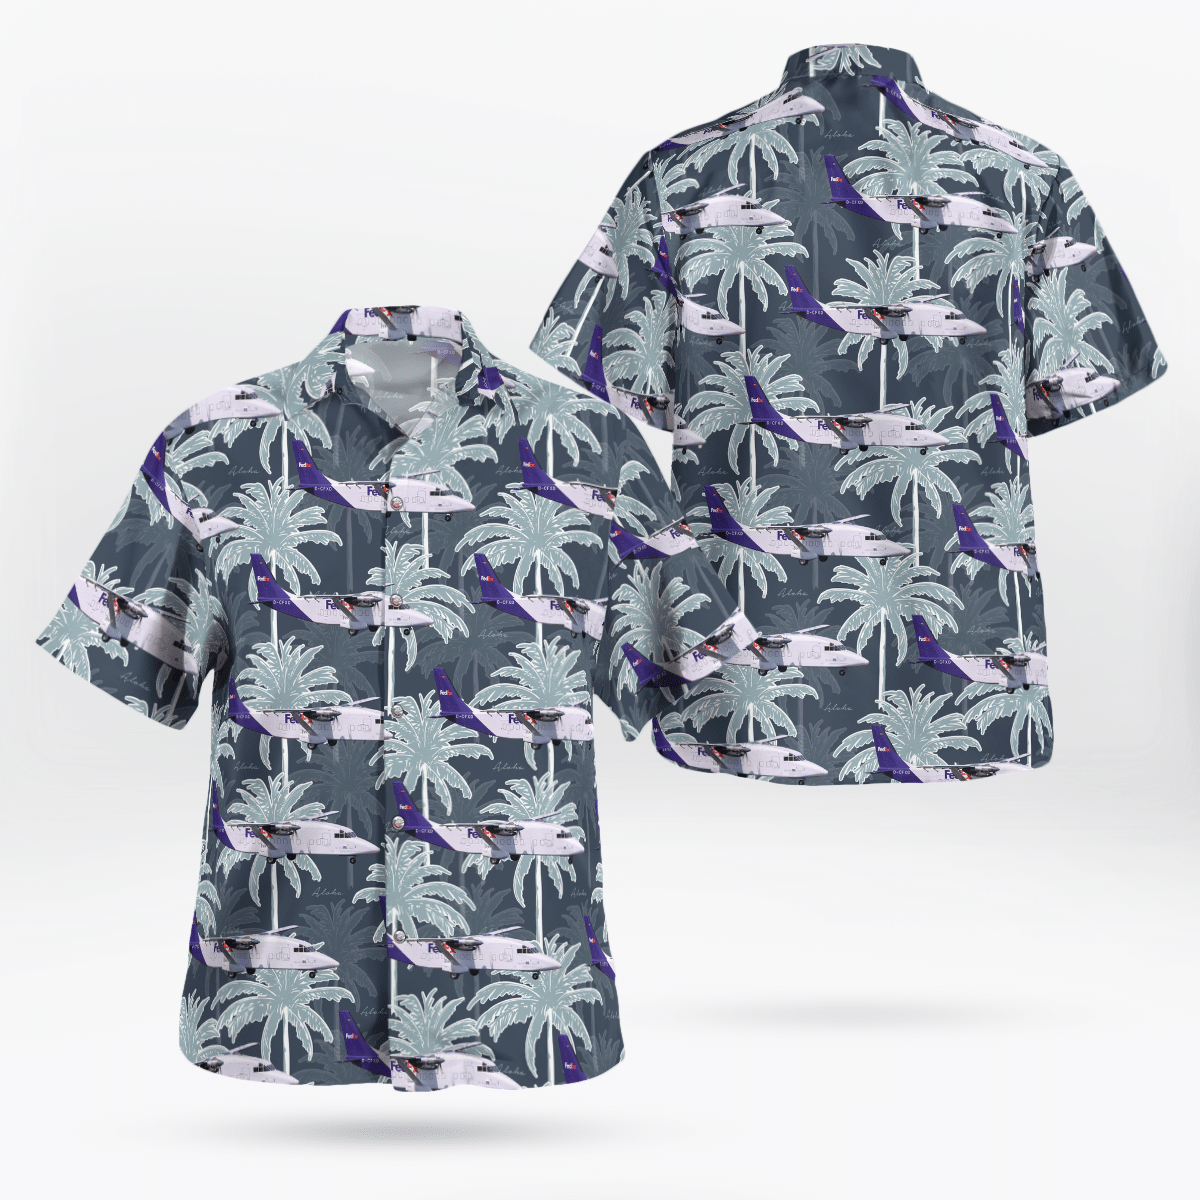 Get a new Hawaiian shirt to enjoy summer vacation 251